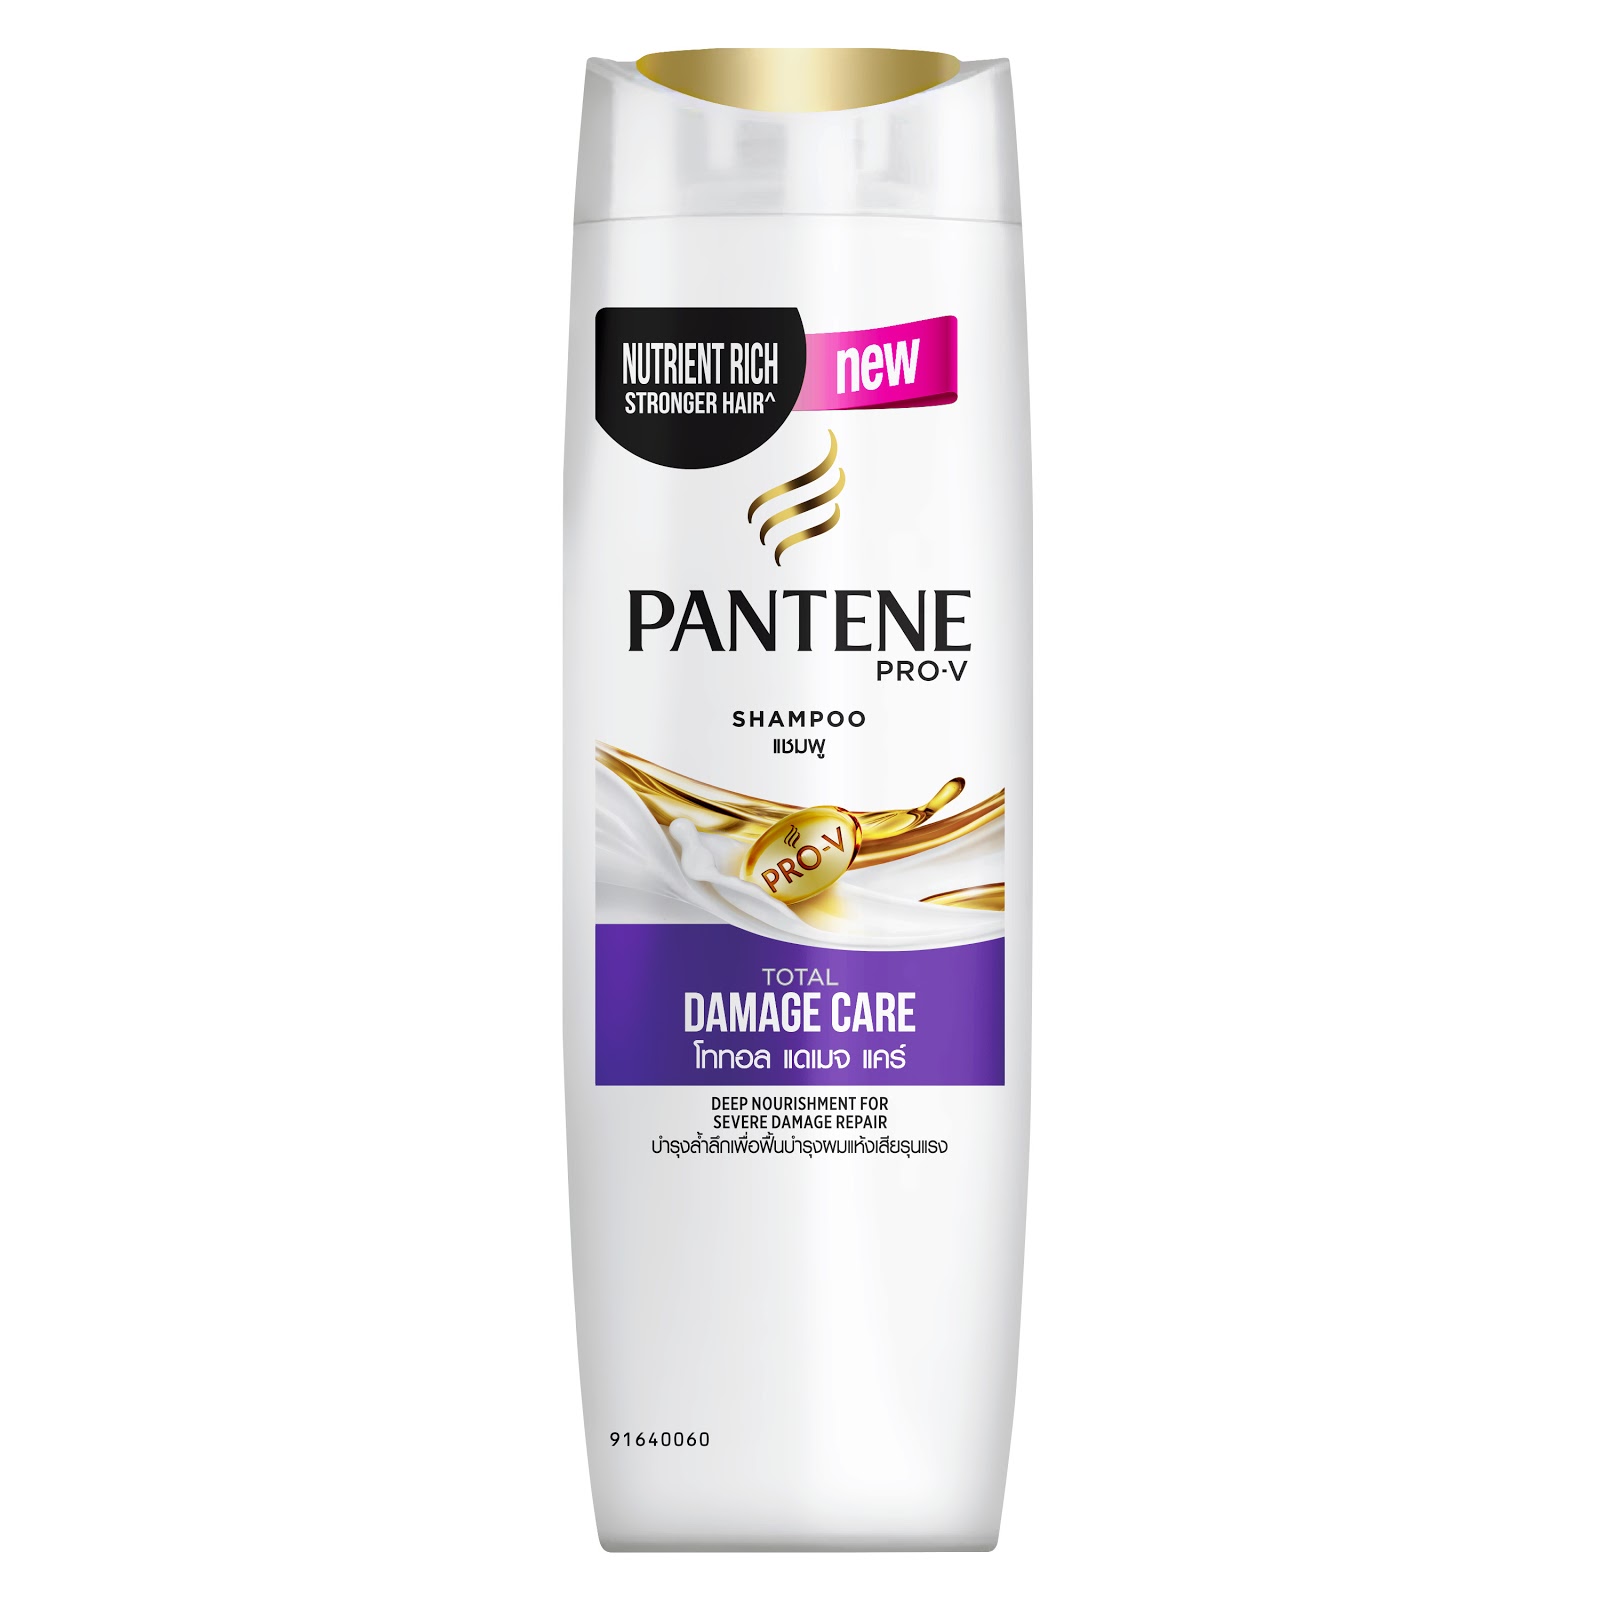 Pantene damage repair shampoo treatment for dry hair